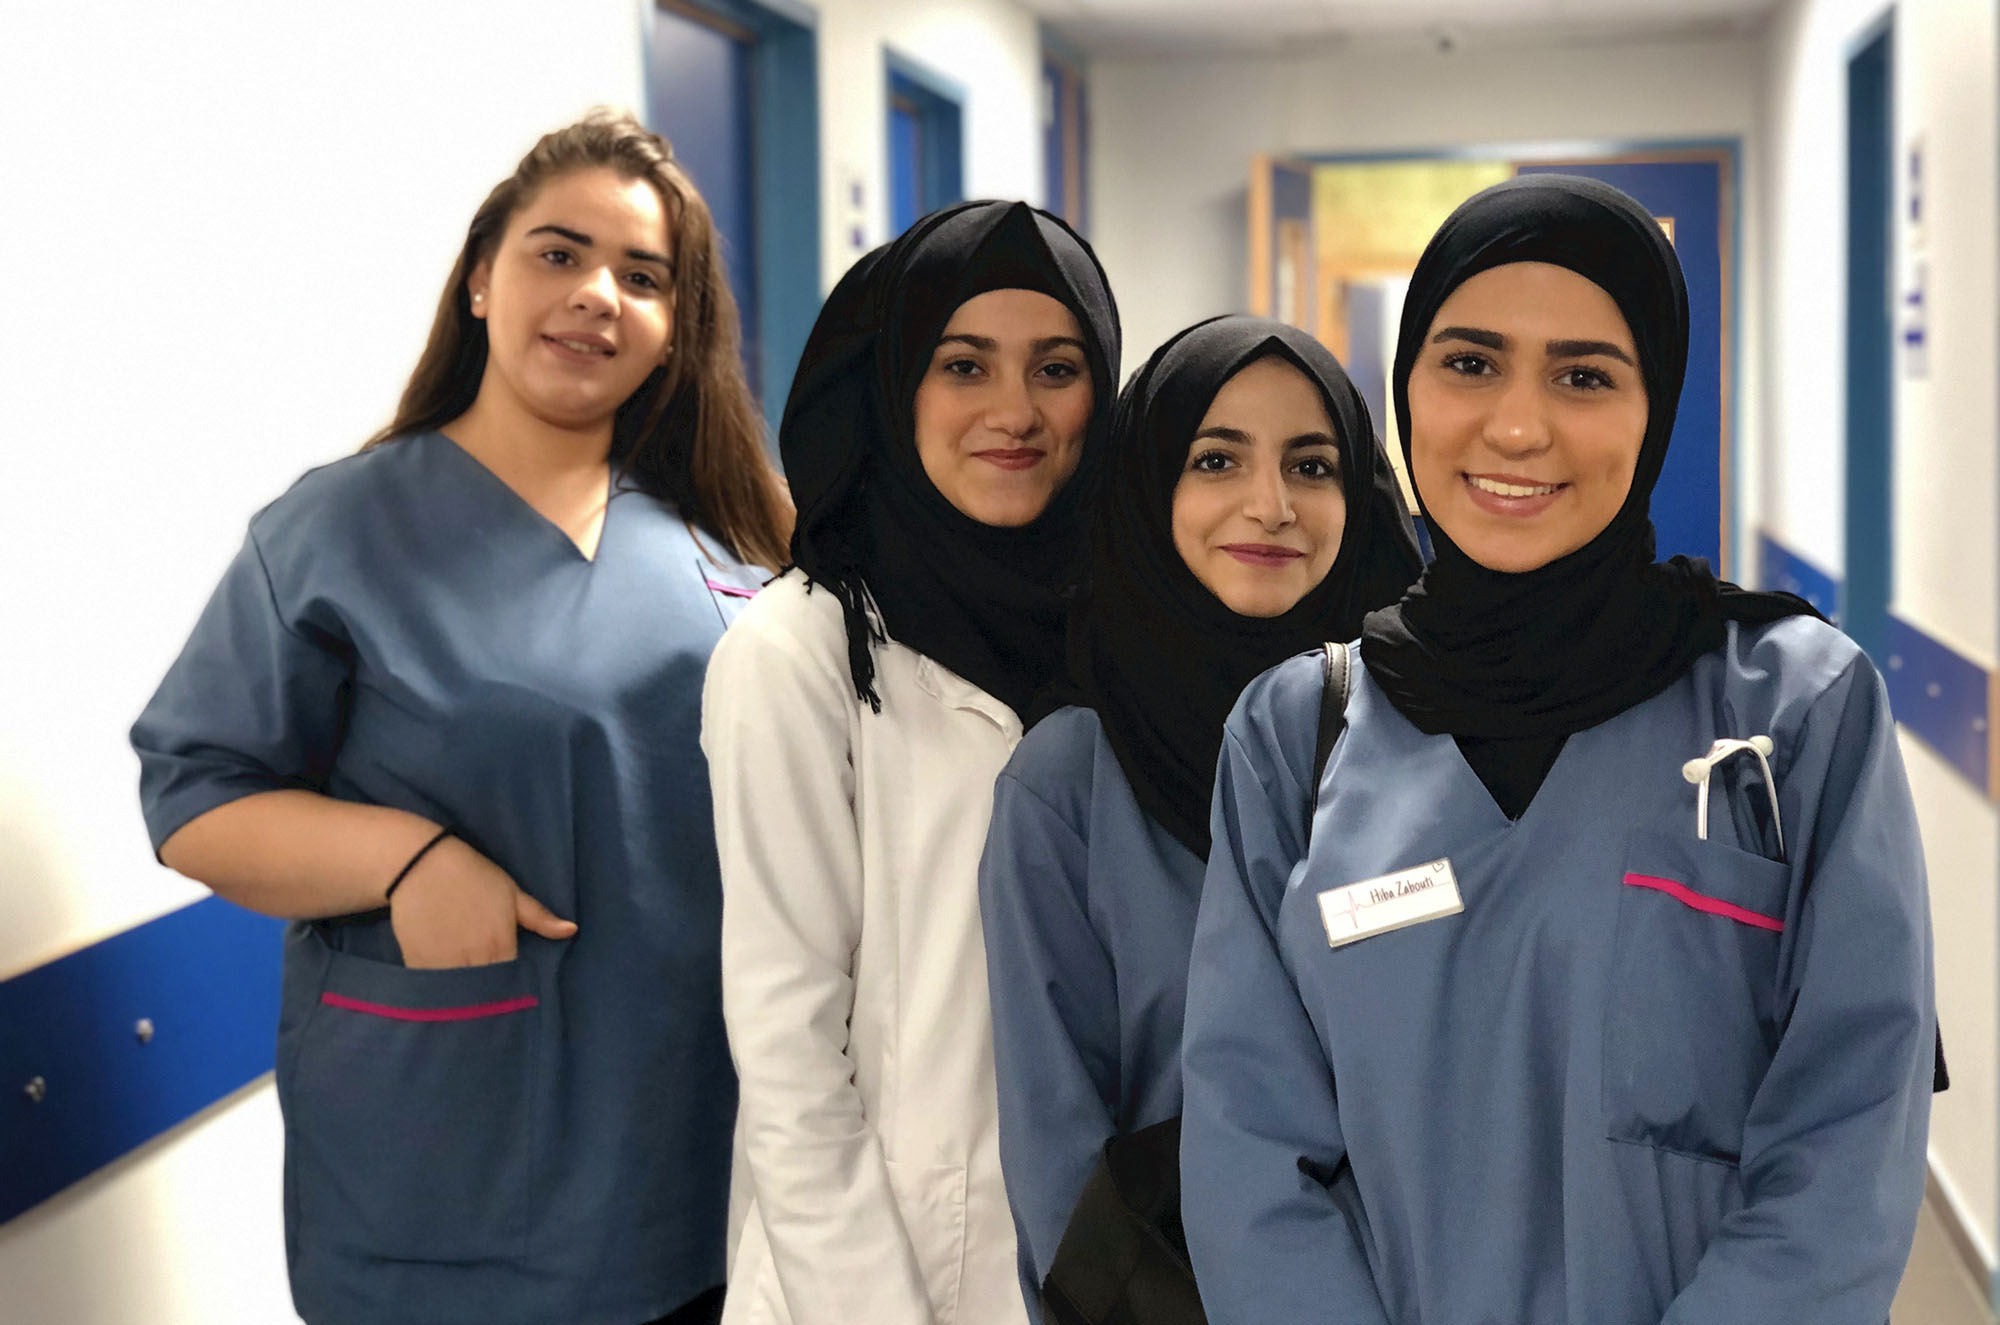 From left: Inas, Aya, Nour and Hiba. Recent graduates of Anera's introductory nursing program.